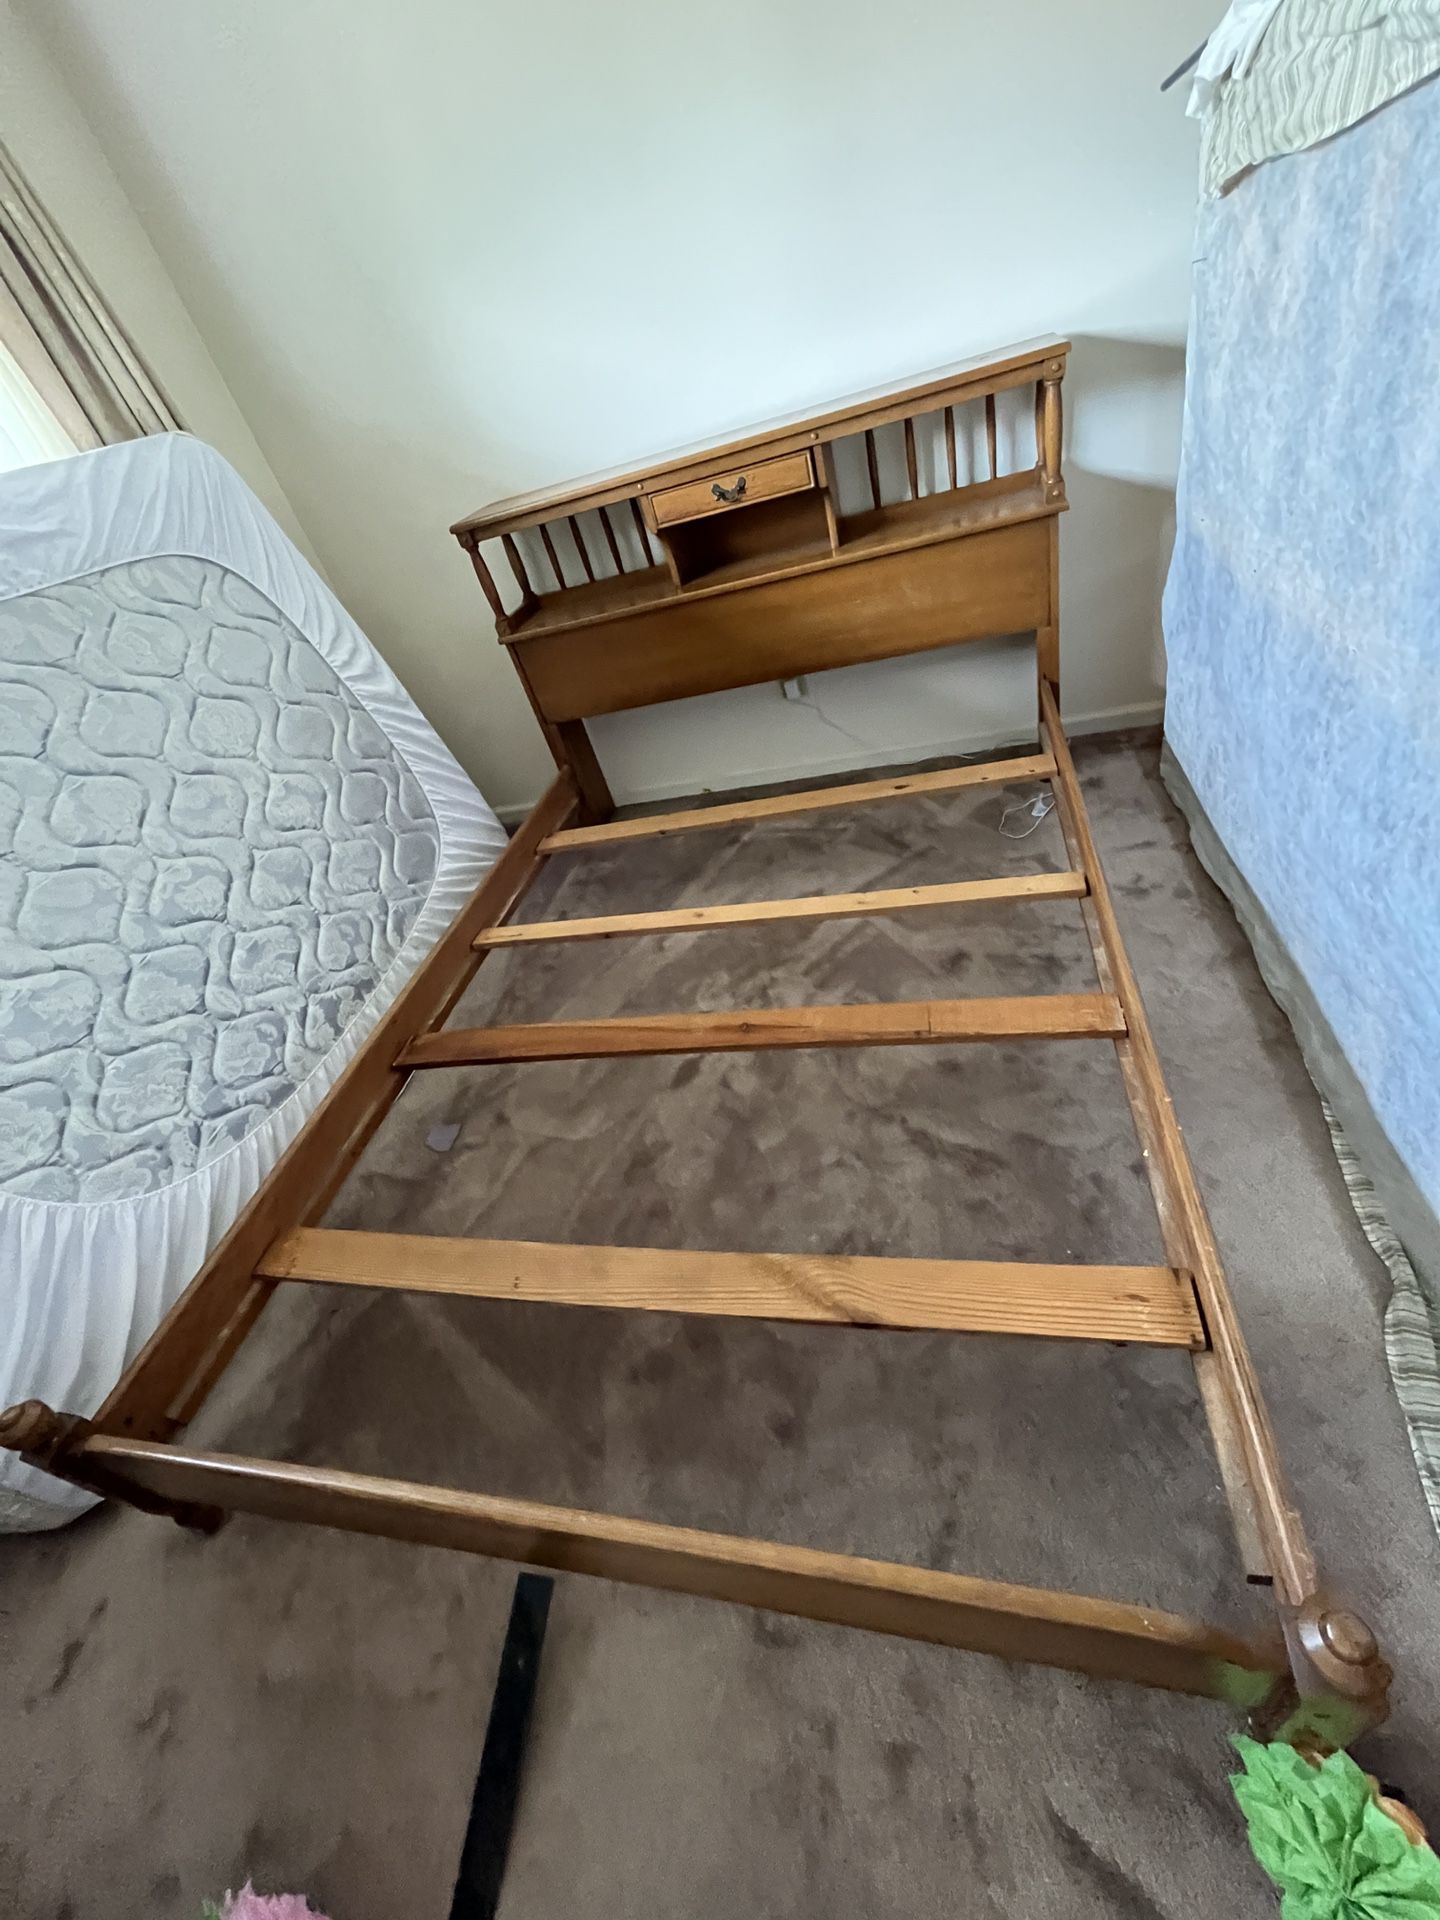 Full bed set, solid wood frame, mattress, box spring